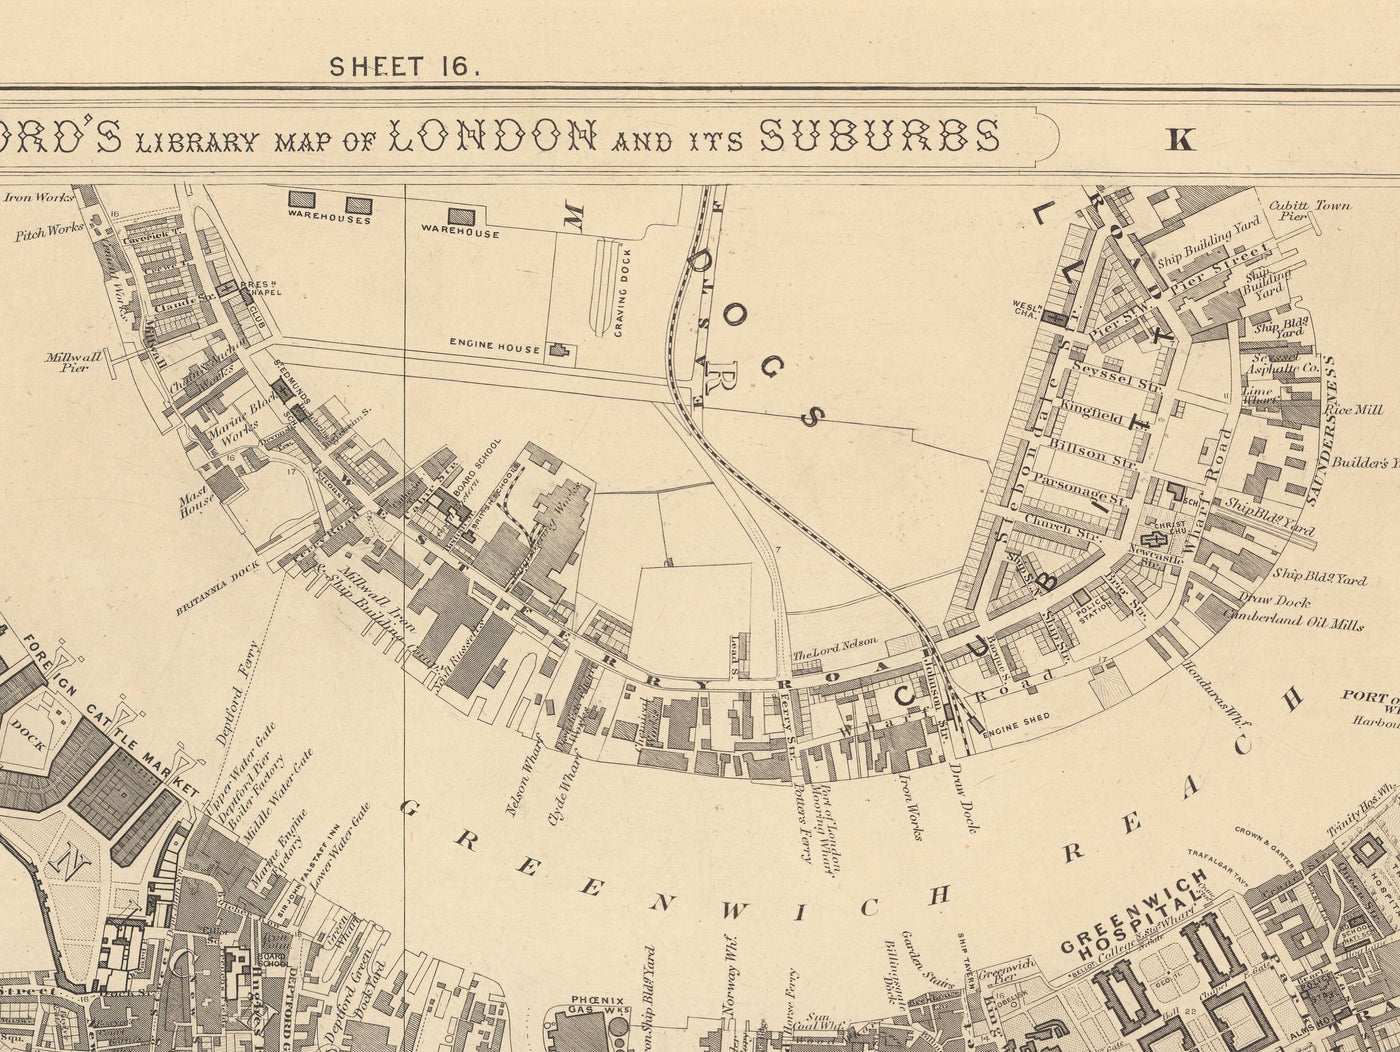 Old Map of South London in 1862 by Edward Stanford - Greenwich, Deptford, New Cross, Blackheath - SE8, SE14, SE10, SE4, SE13